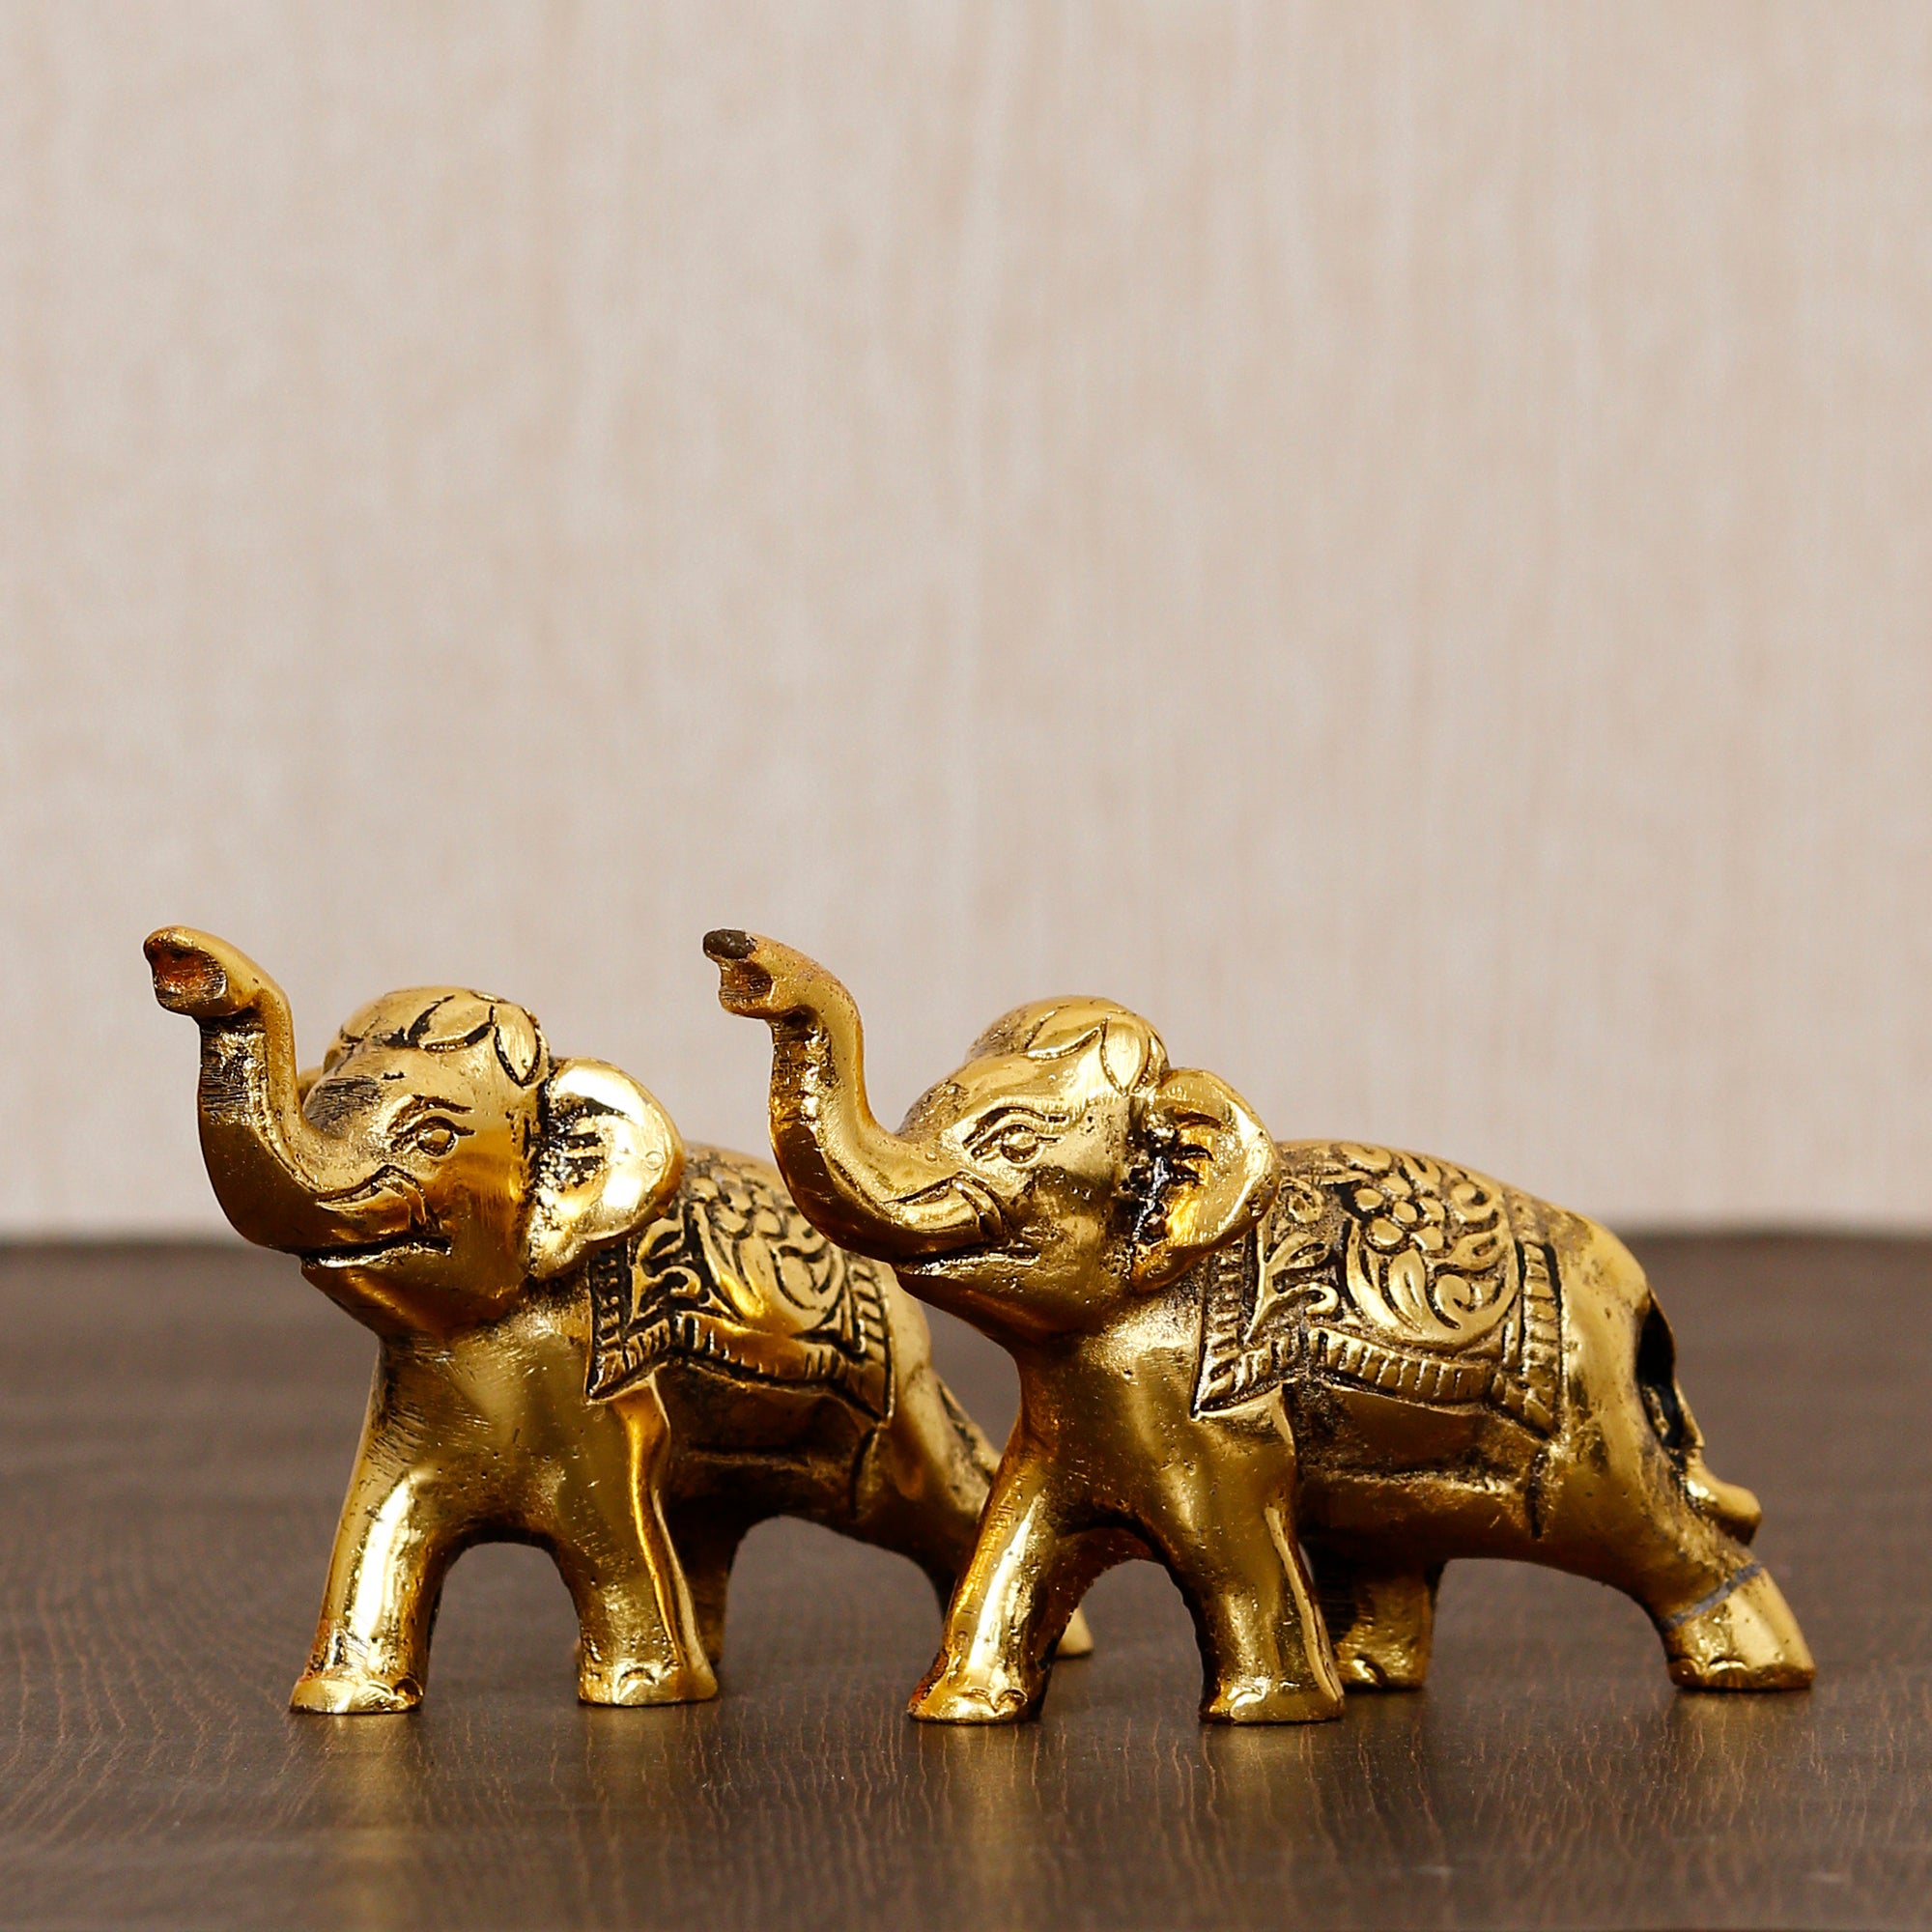 Set of 2 Golden Metal Elephants Statue, Animal Figurine Decorative Showpiece